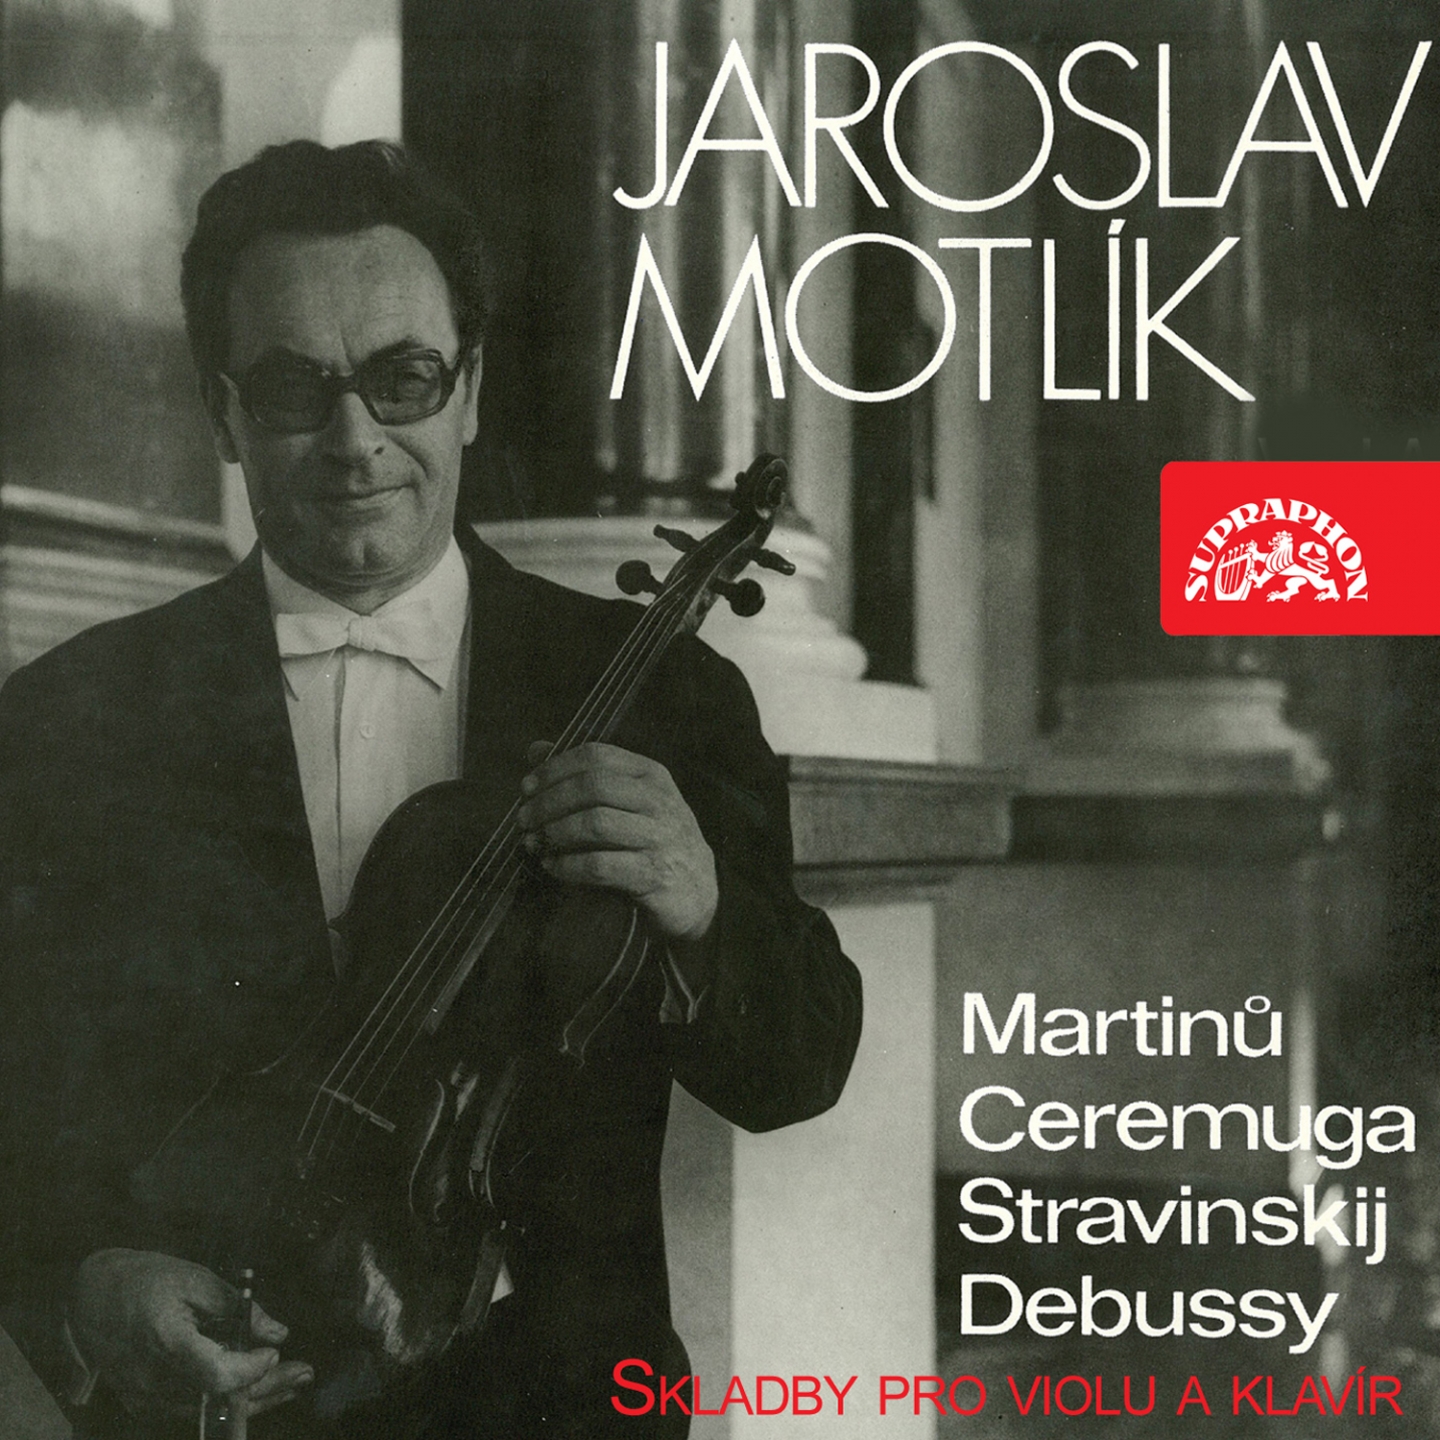 Martin, Ceremuga, Stravinsky, Debussy: Works for Viola and Piano